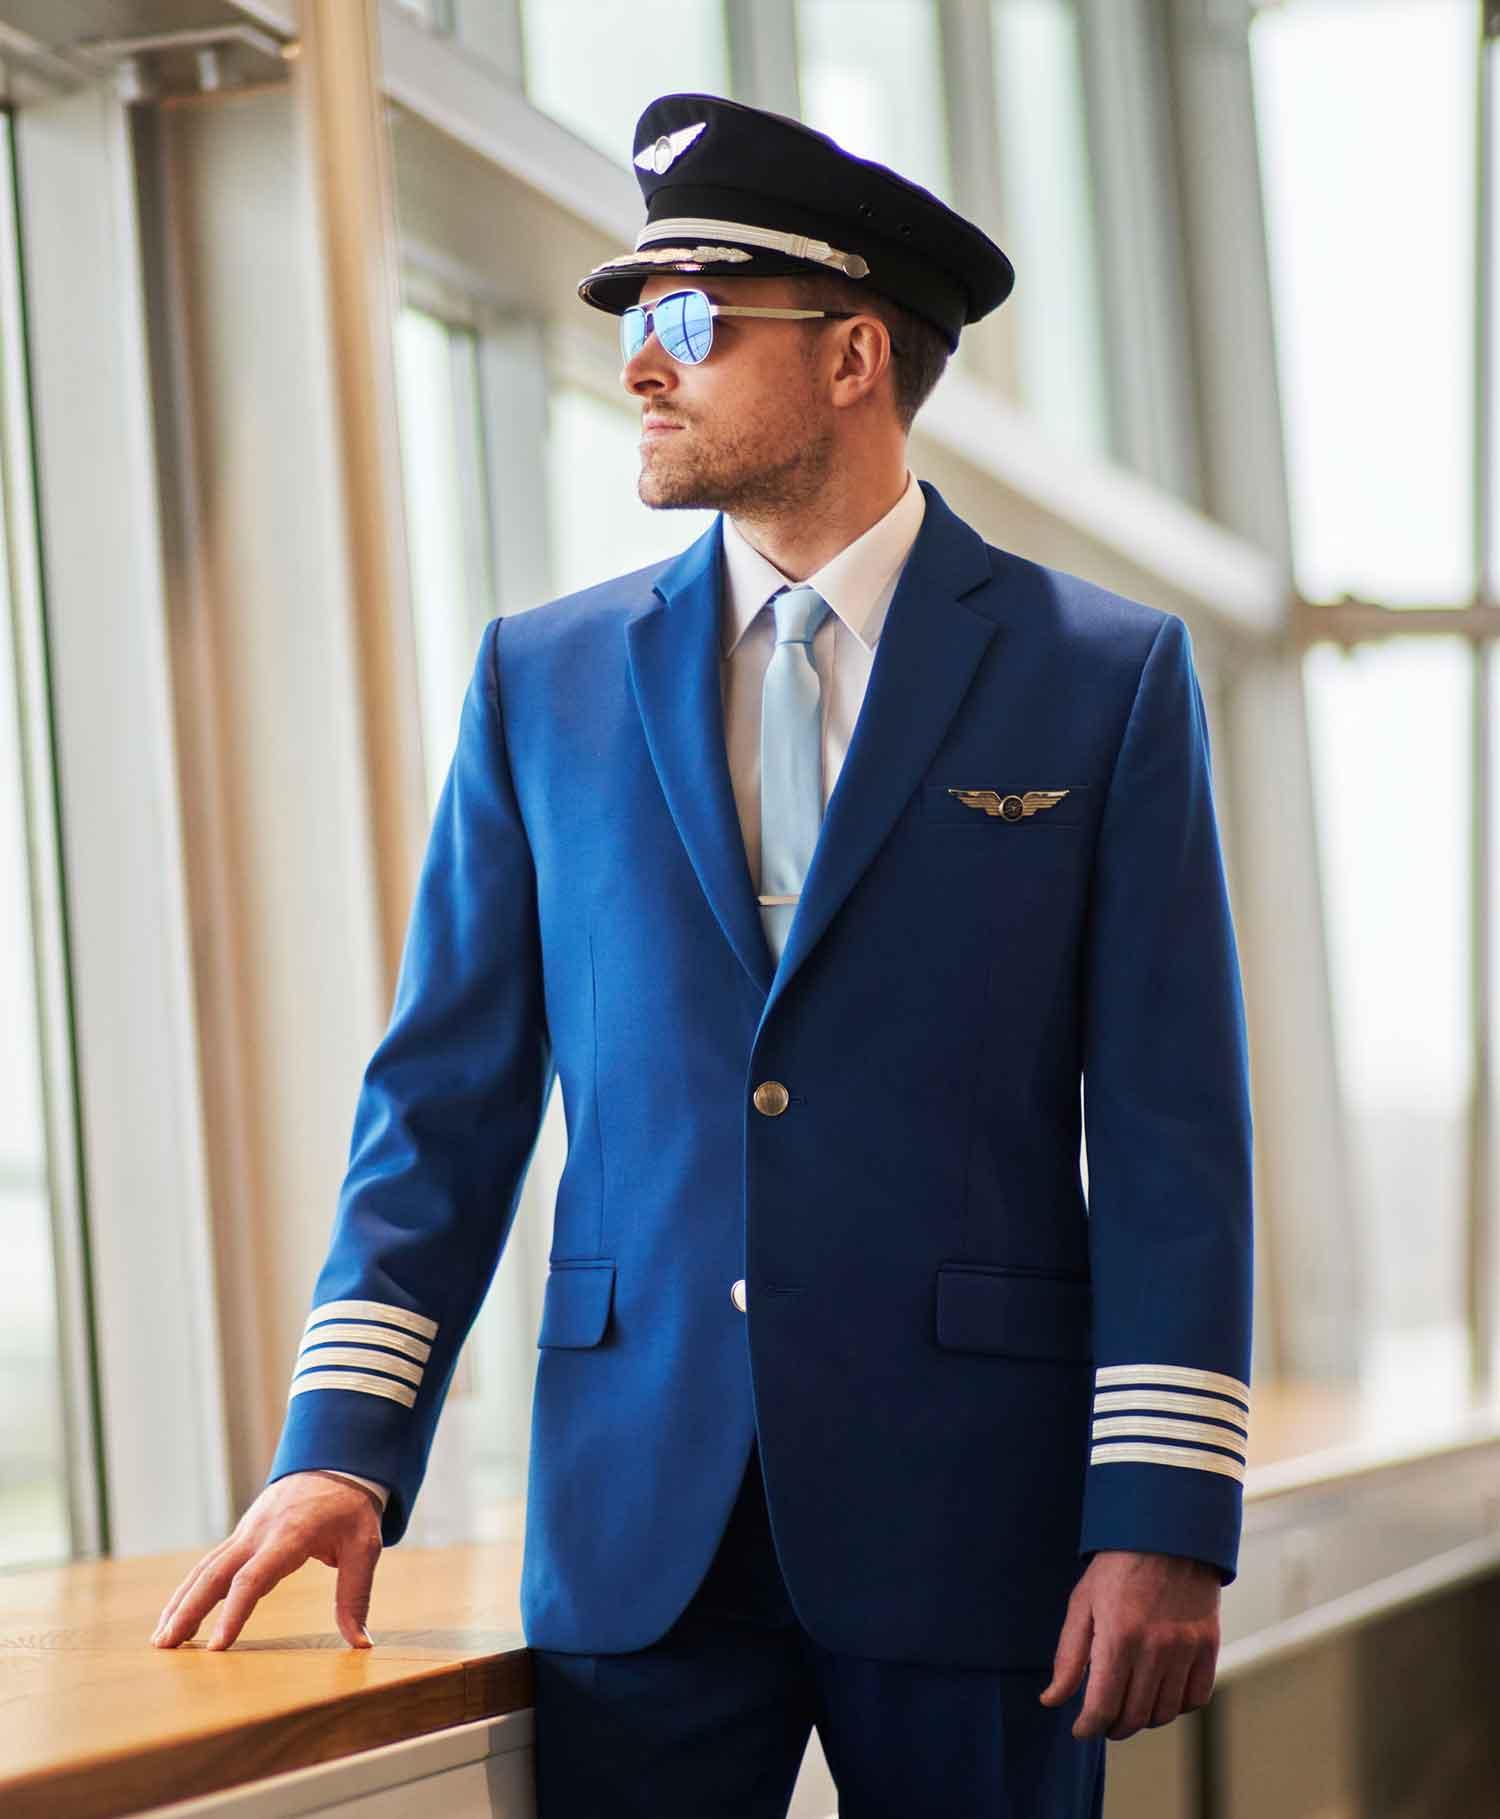 Pilot in a blue uniform